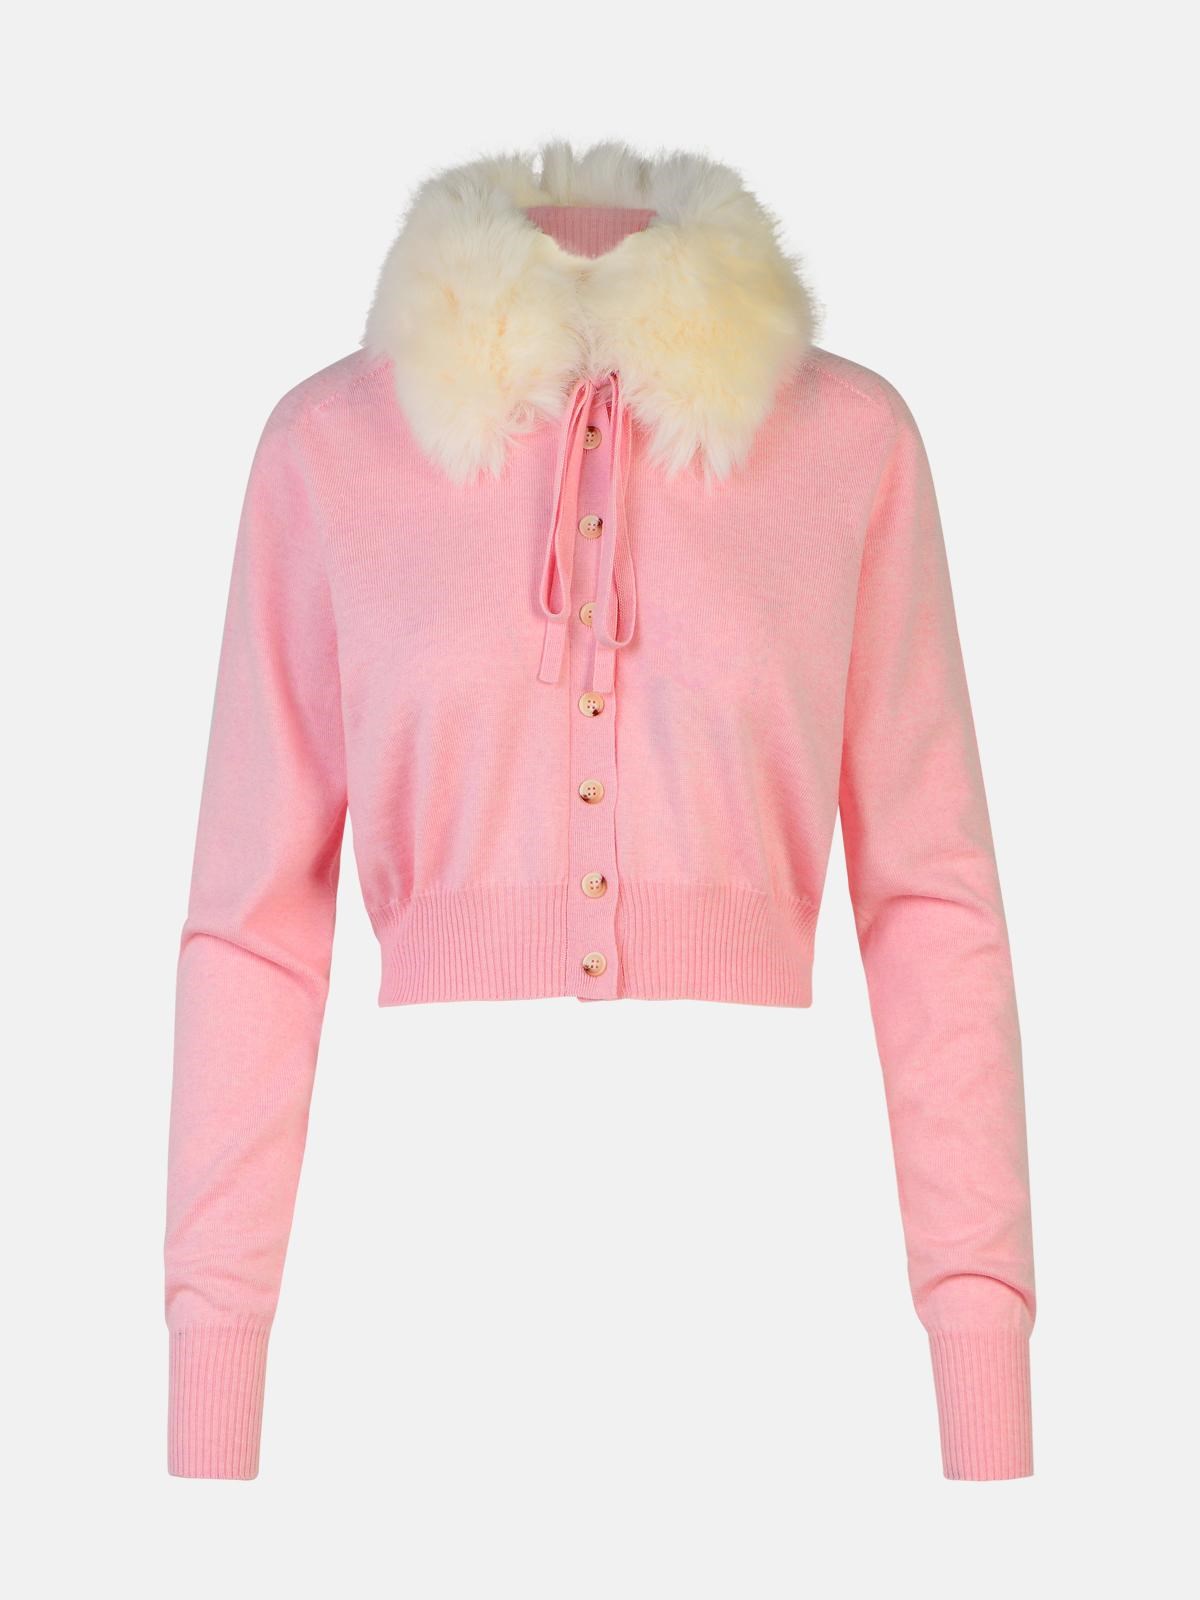 Sportmax 'sport' Pink Virgin Wool Cardigan